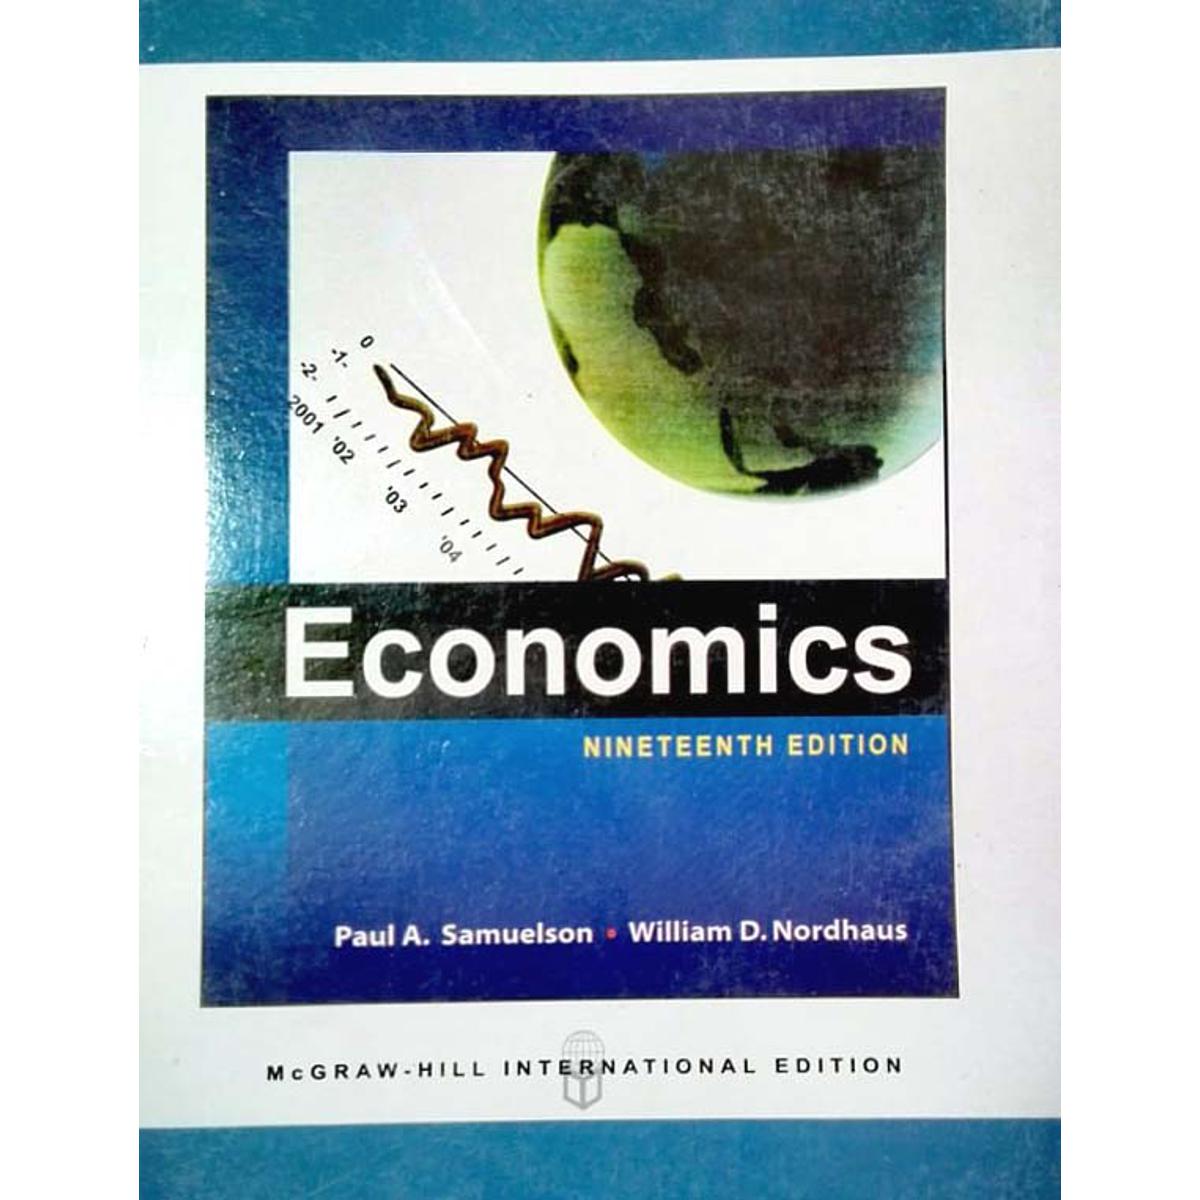 Economics 9th Edition ( Paul A. Samuelson & William D. Nordhaus)